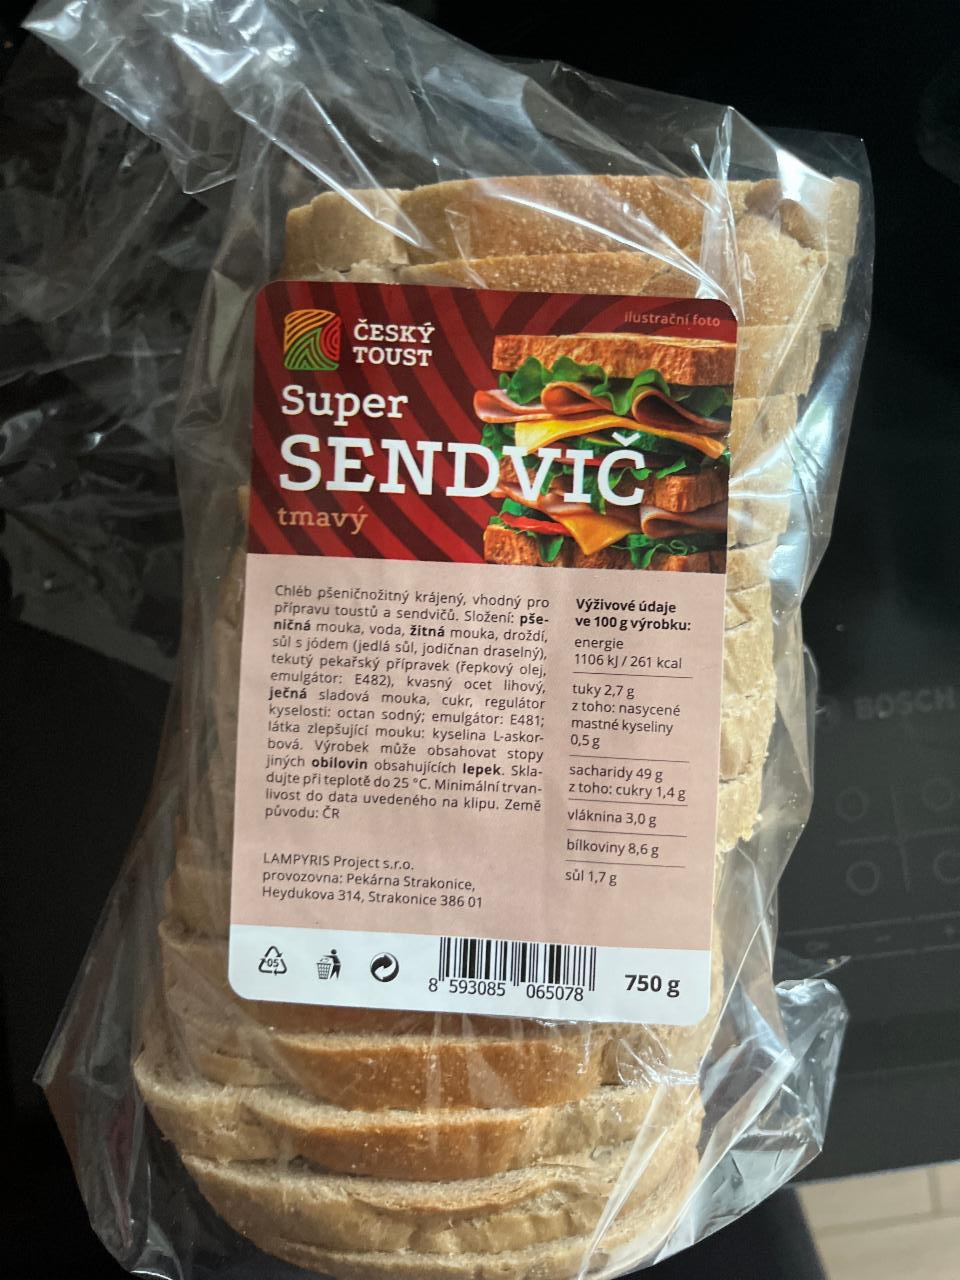 Fotografie - Super sendvič tmavý Český toust